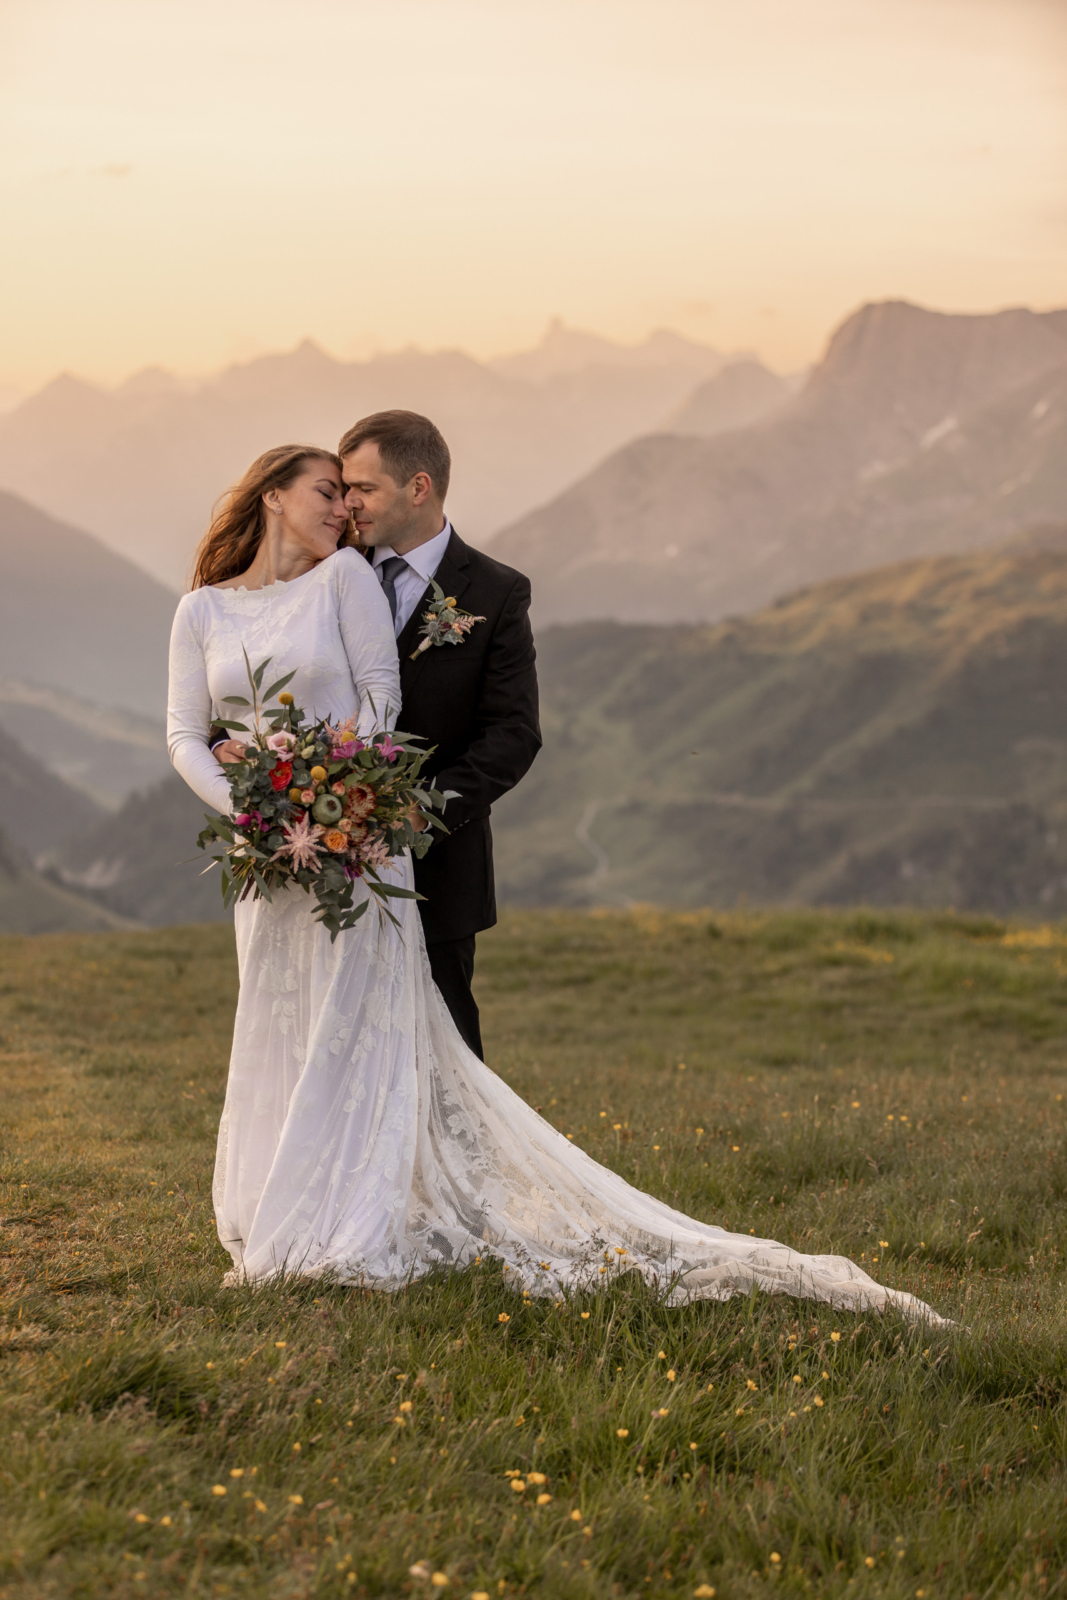 romantic wedding photos in the mountains